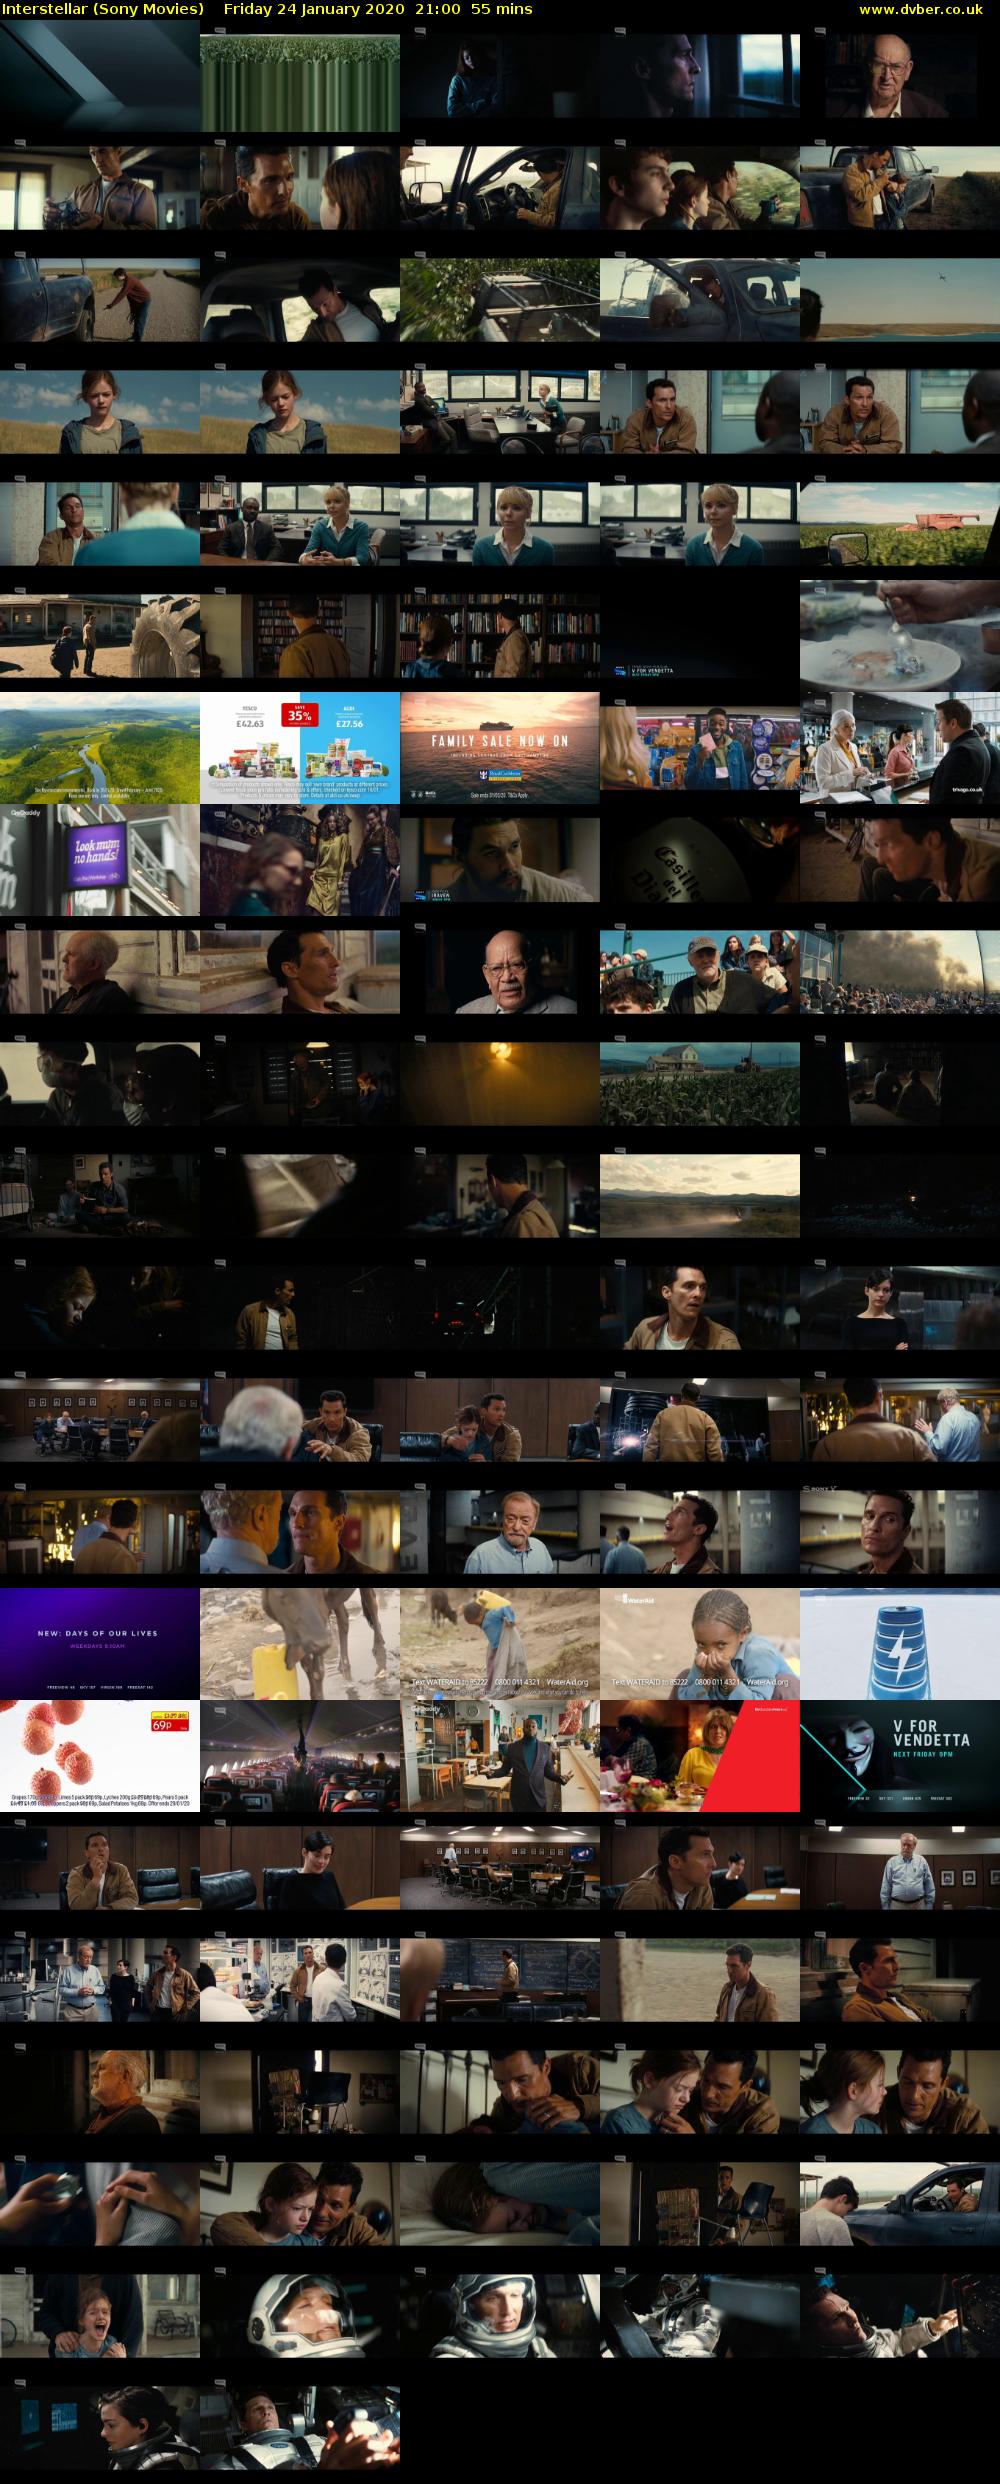 Interstellar (Sony Movies) Friday 24 January 2020 21:00 - 21:55